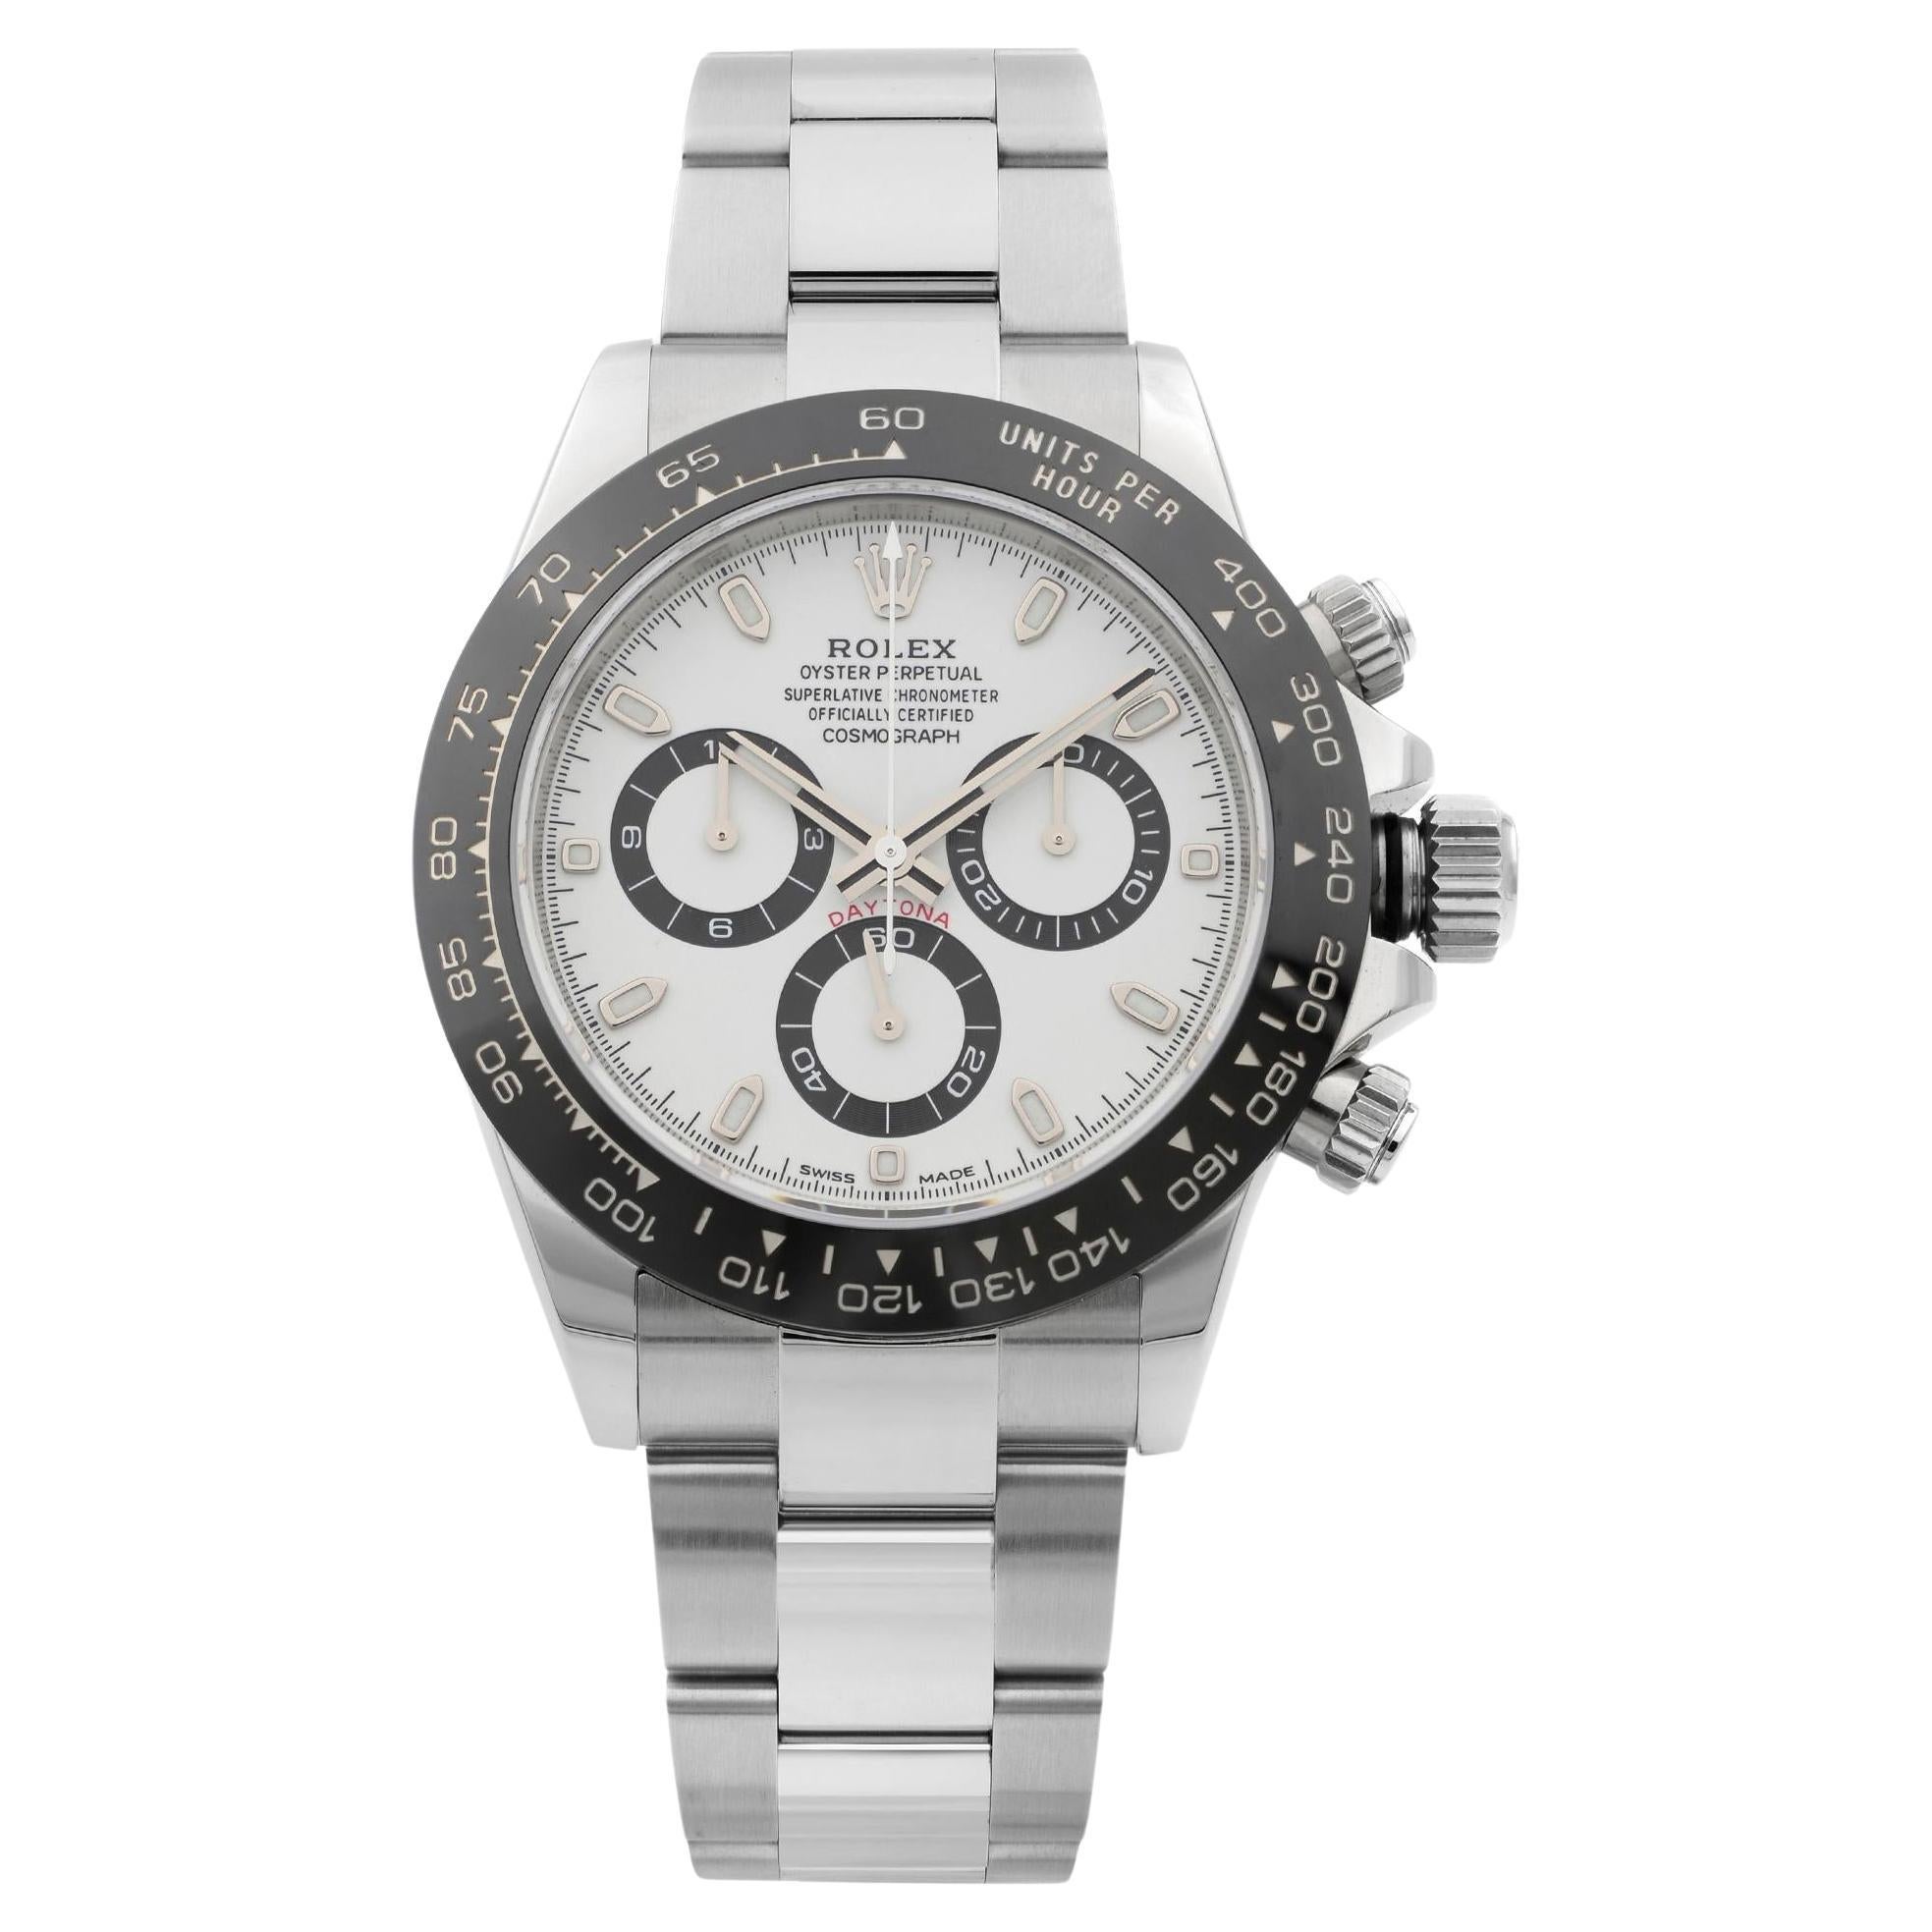 Rolex Daytona Cosmograph White Dial Steel Ceramic Automatic Men's Watch 116500LN